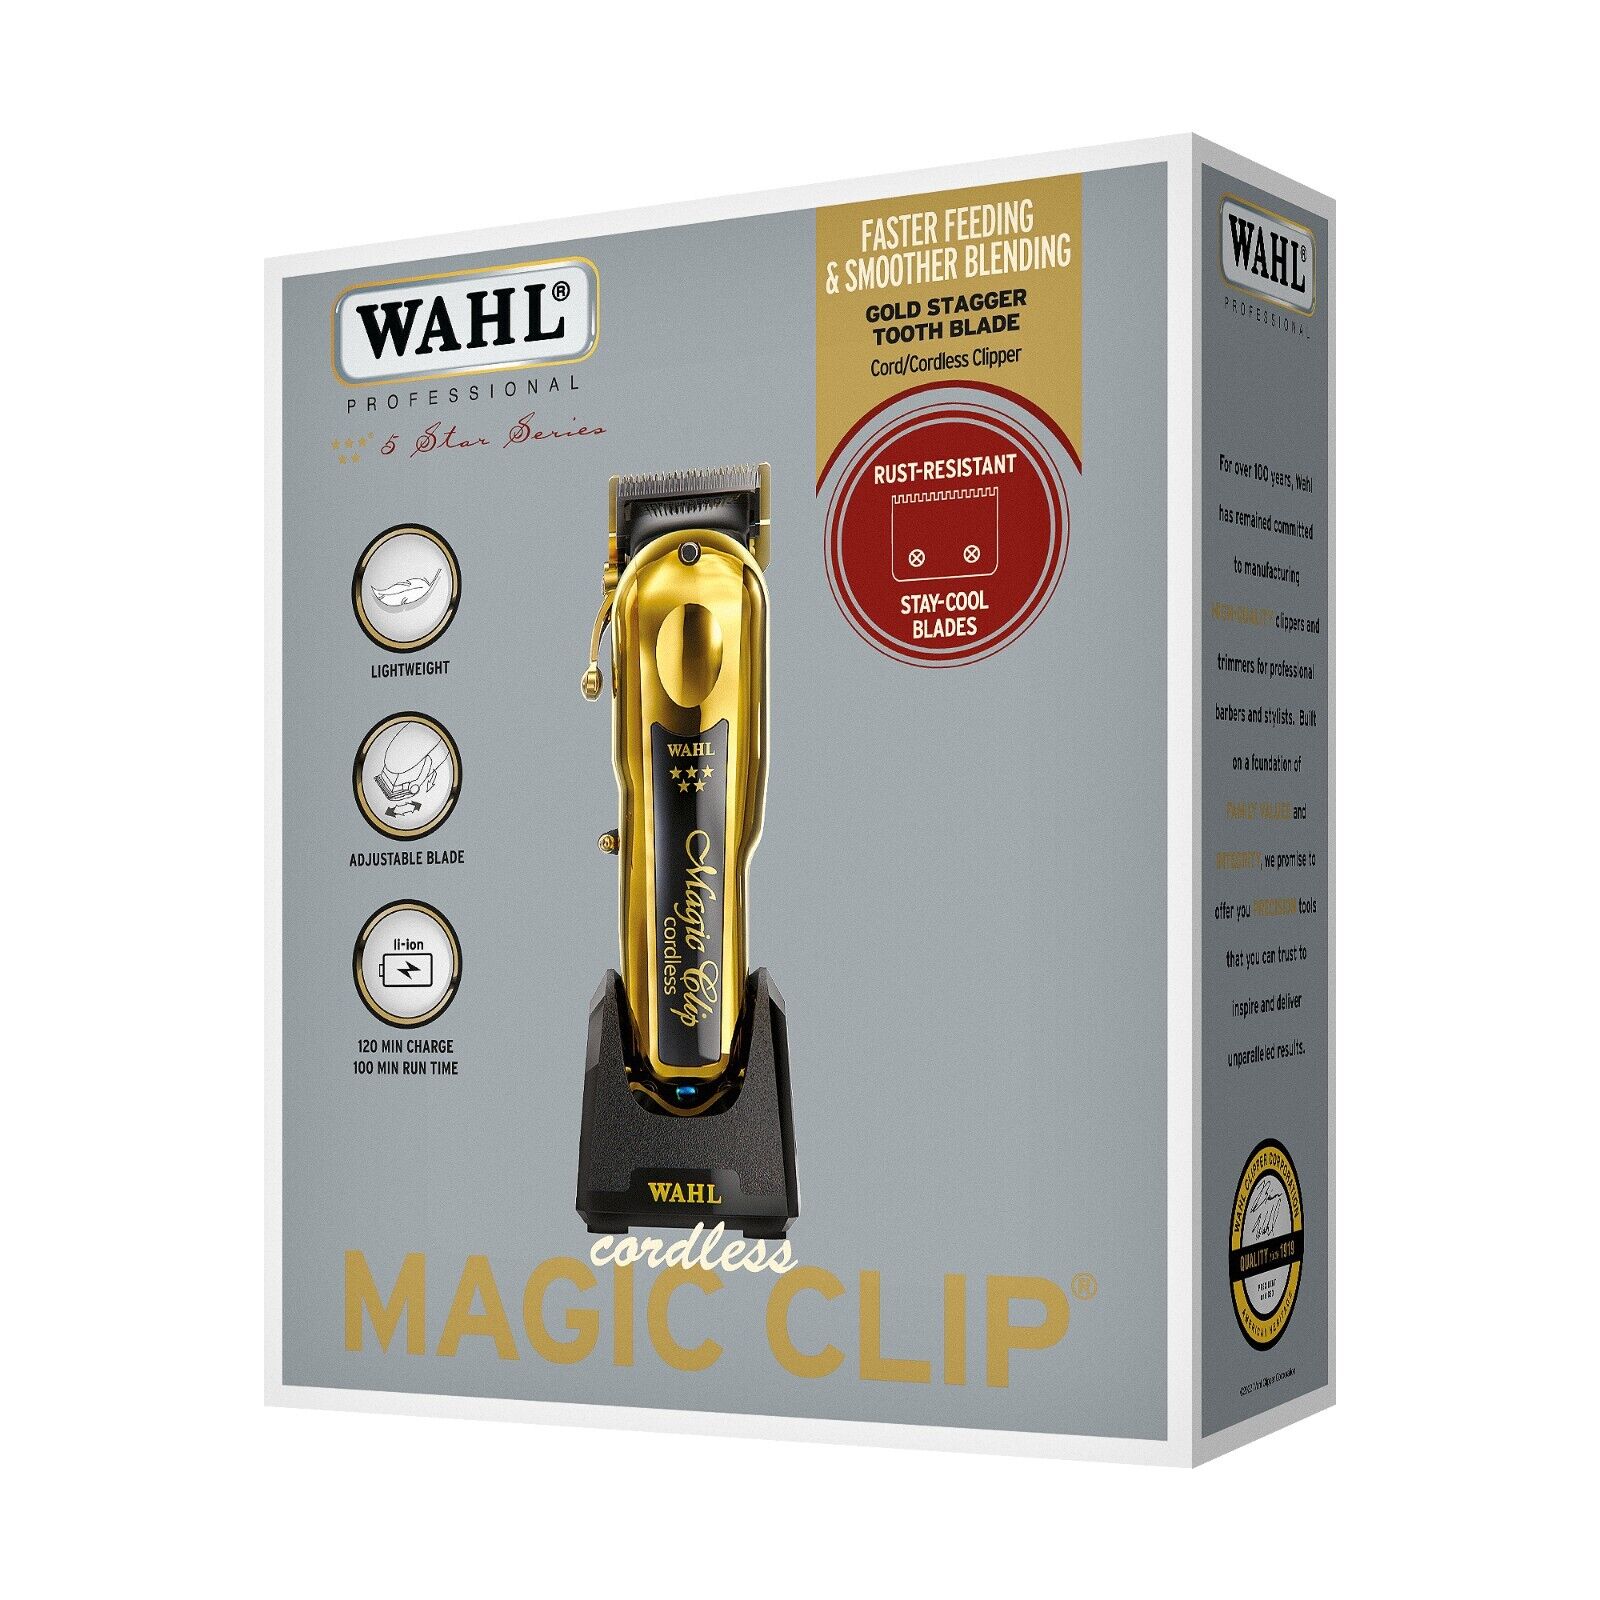 ^^wahl 5star cordless magic clip gold